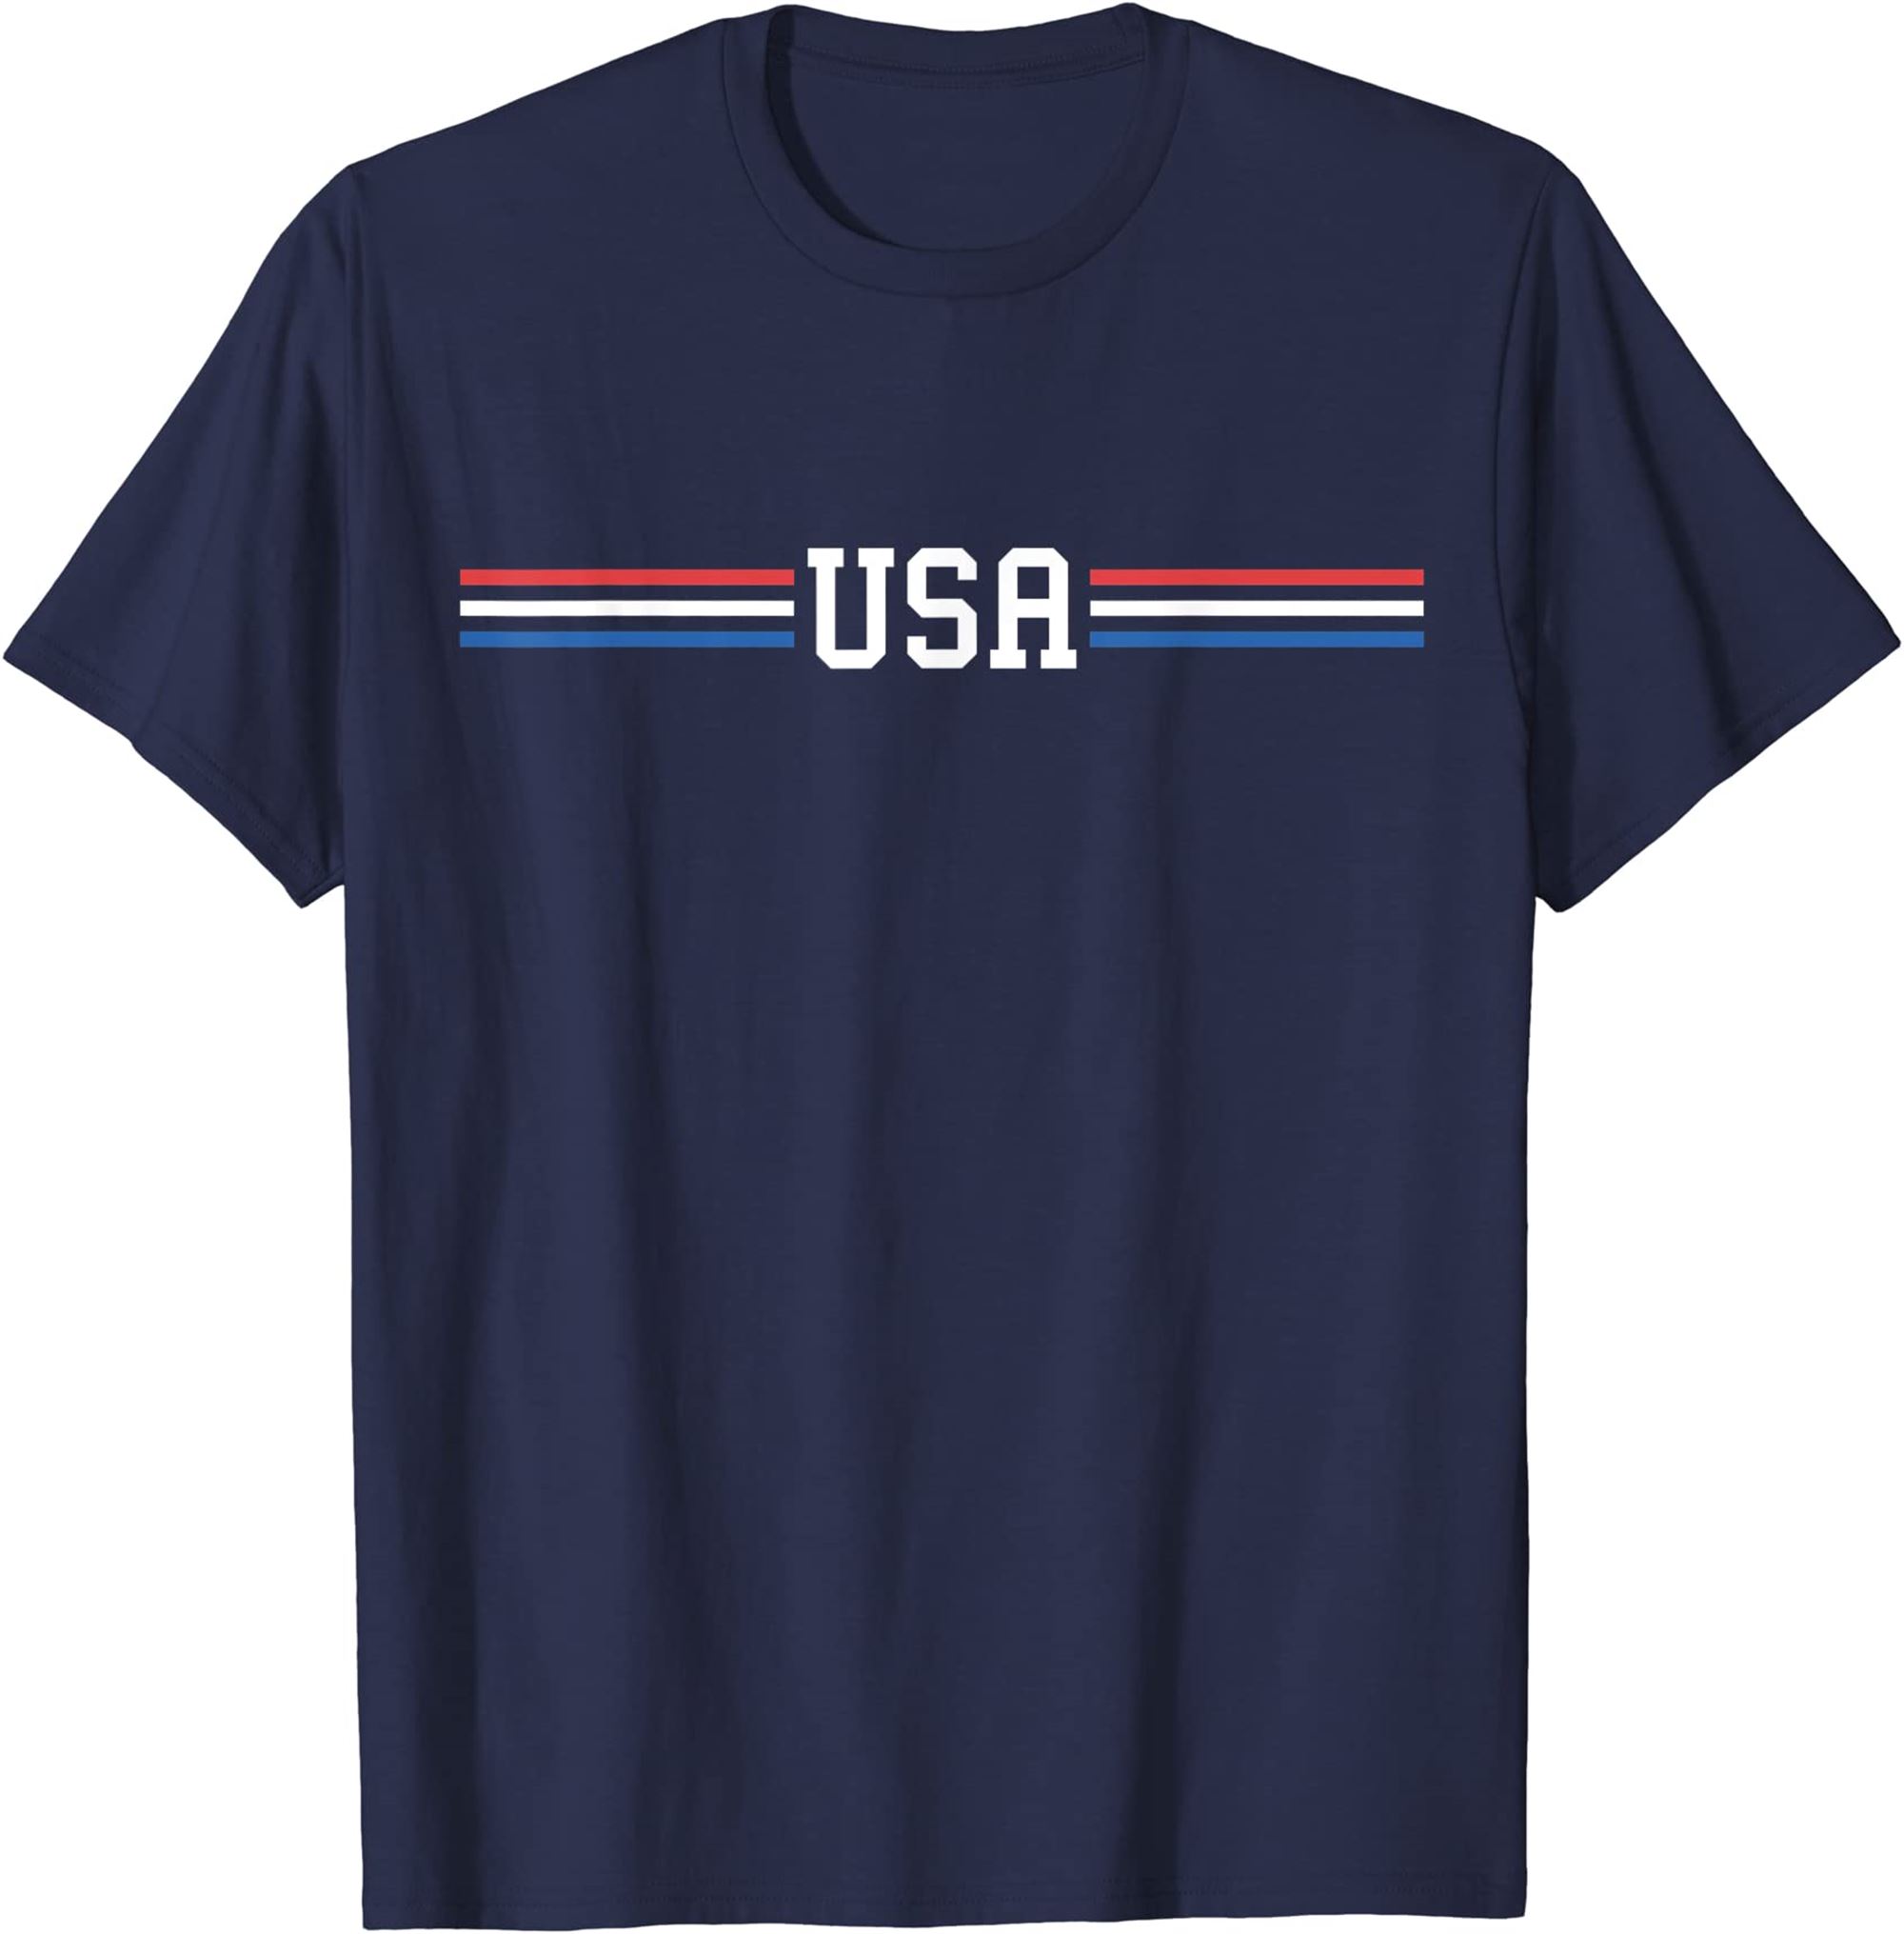 Usa Shirt Women Men Kids Cute Patriotic American 4th Of July T-shirt Plus Size Up To 5xl